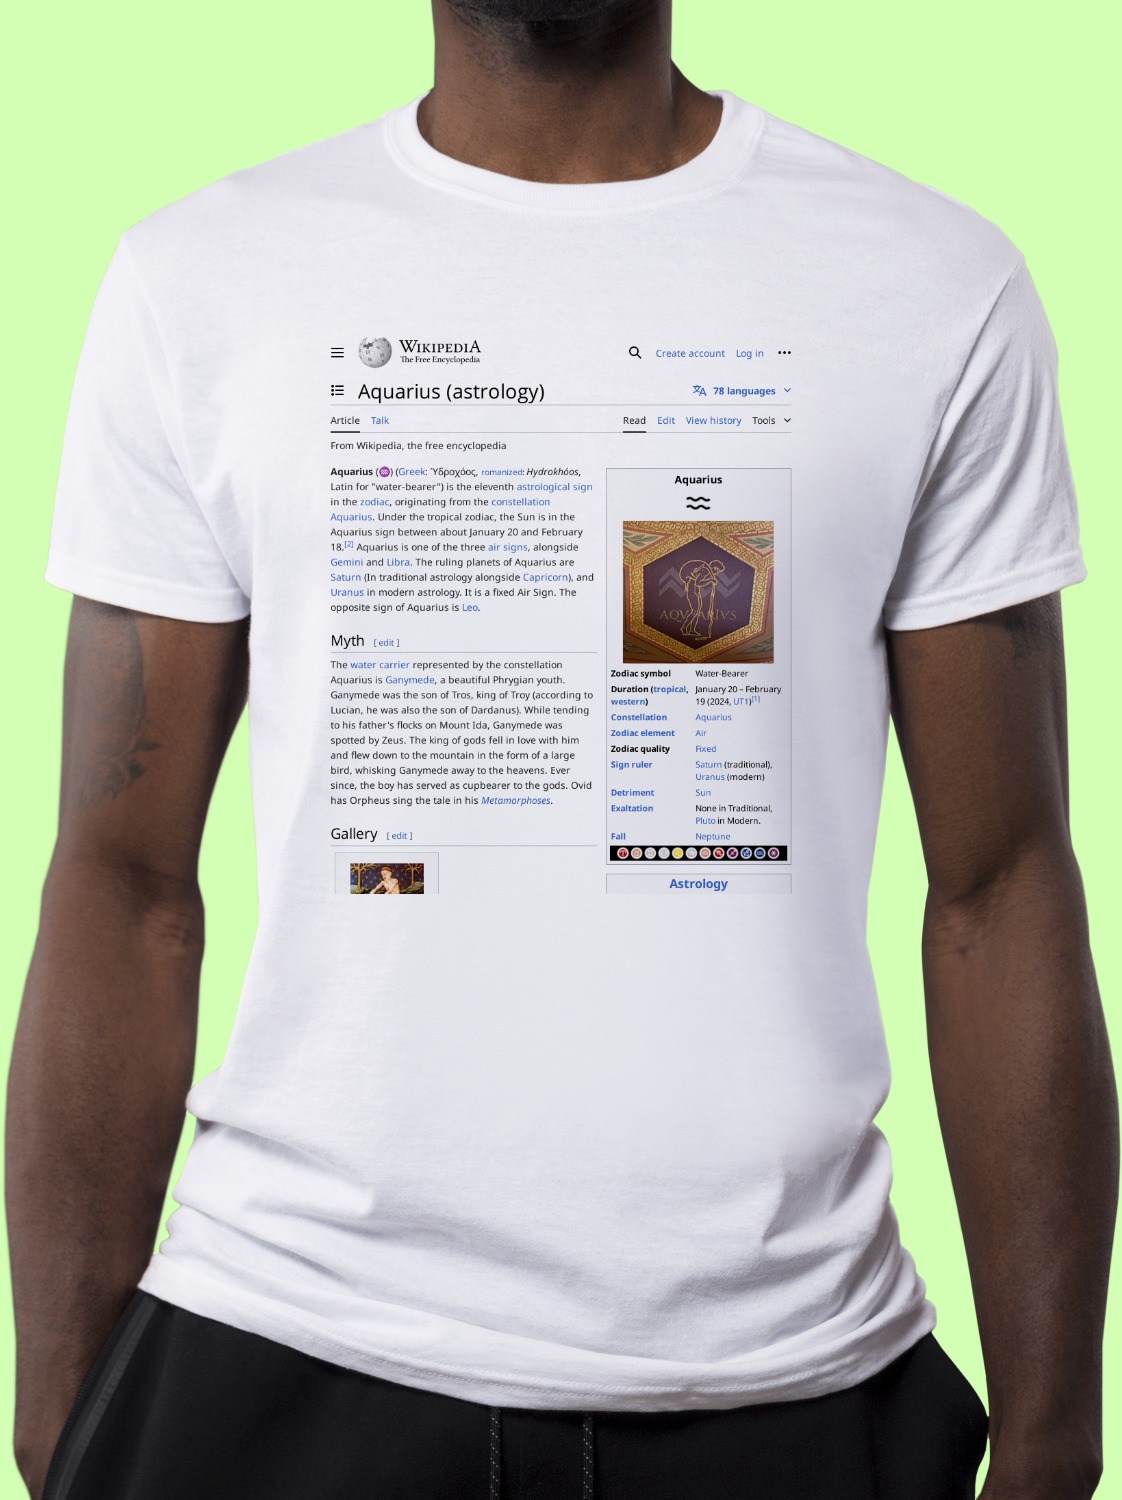 Aquarius_(astrology) Wikipedia Shirt